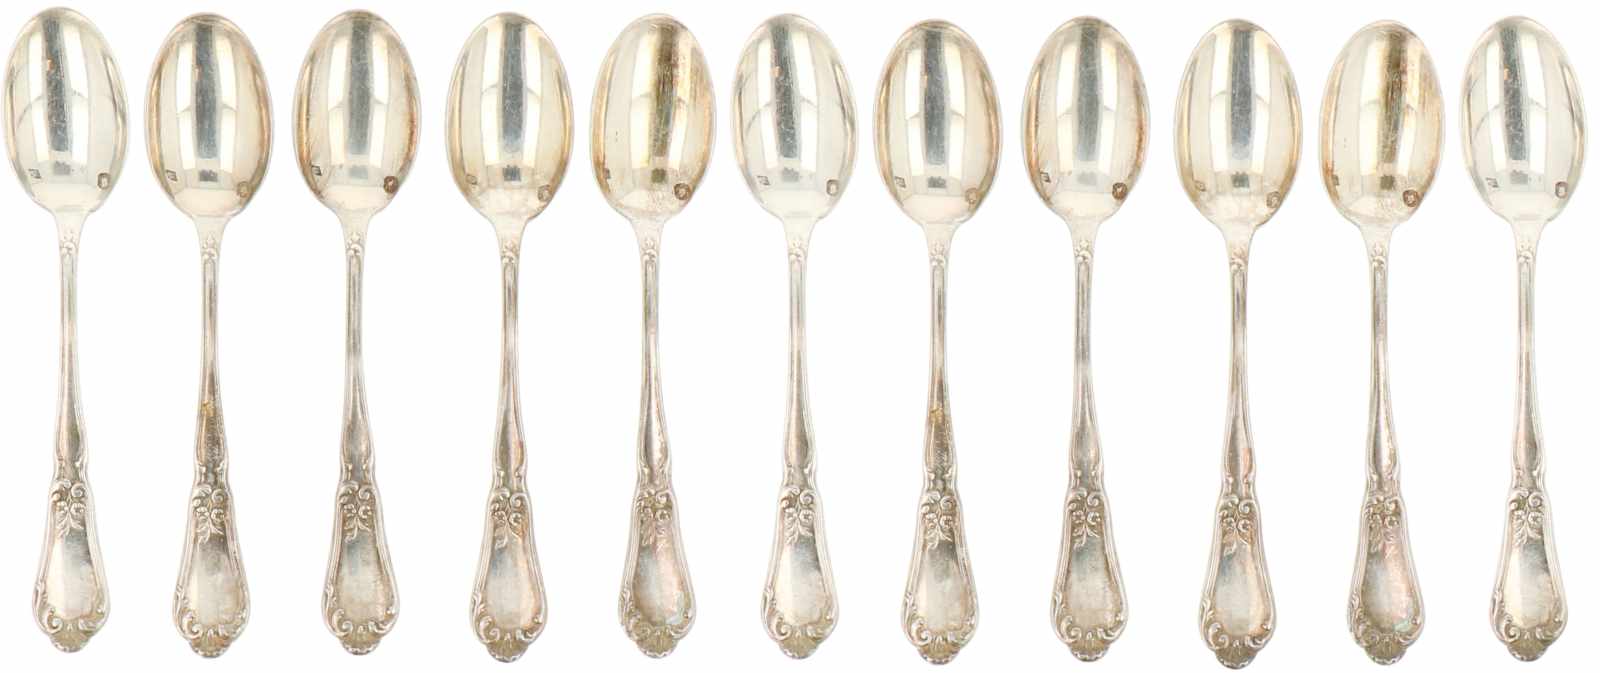 (11) Piece set of silver teaspoons.